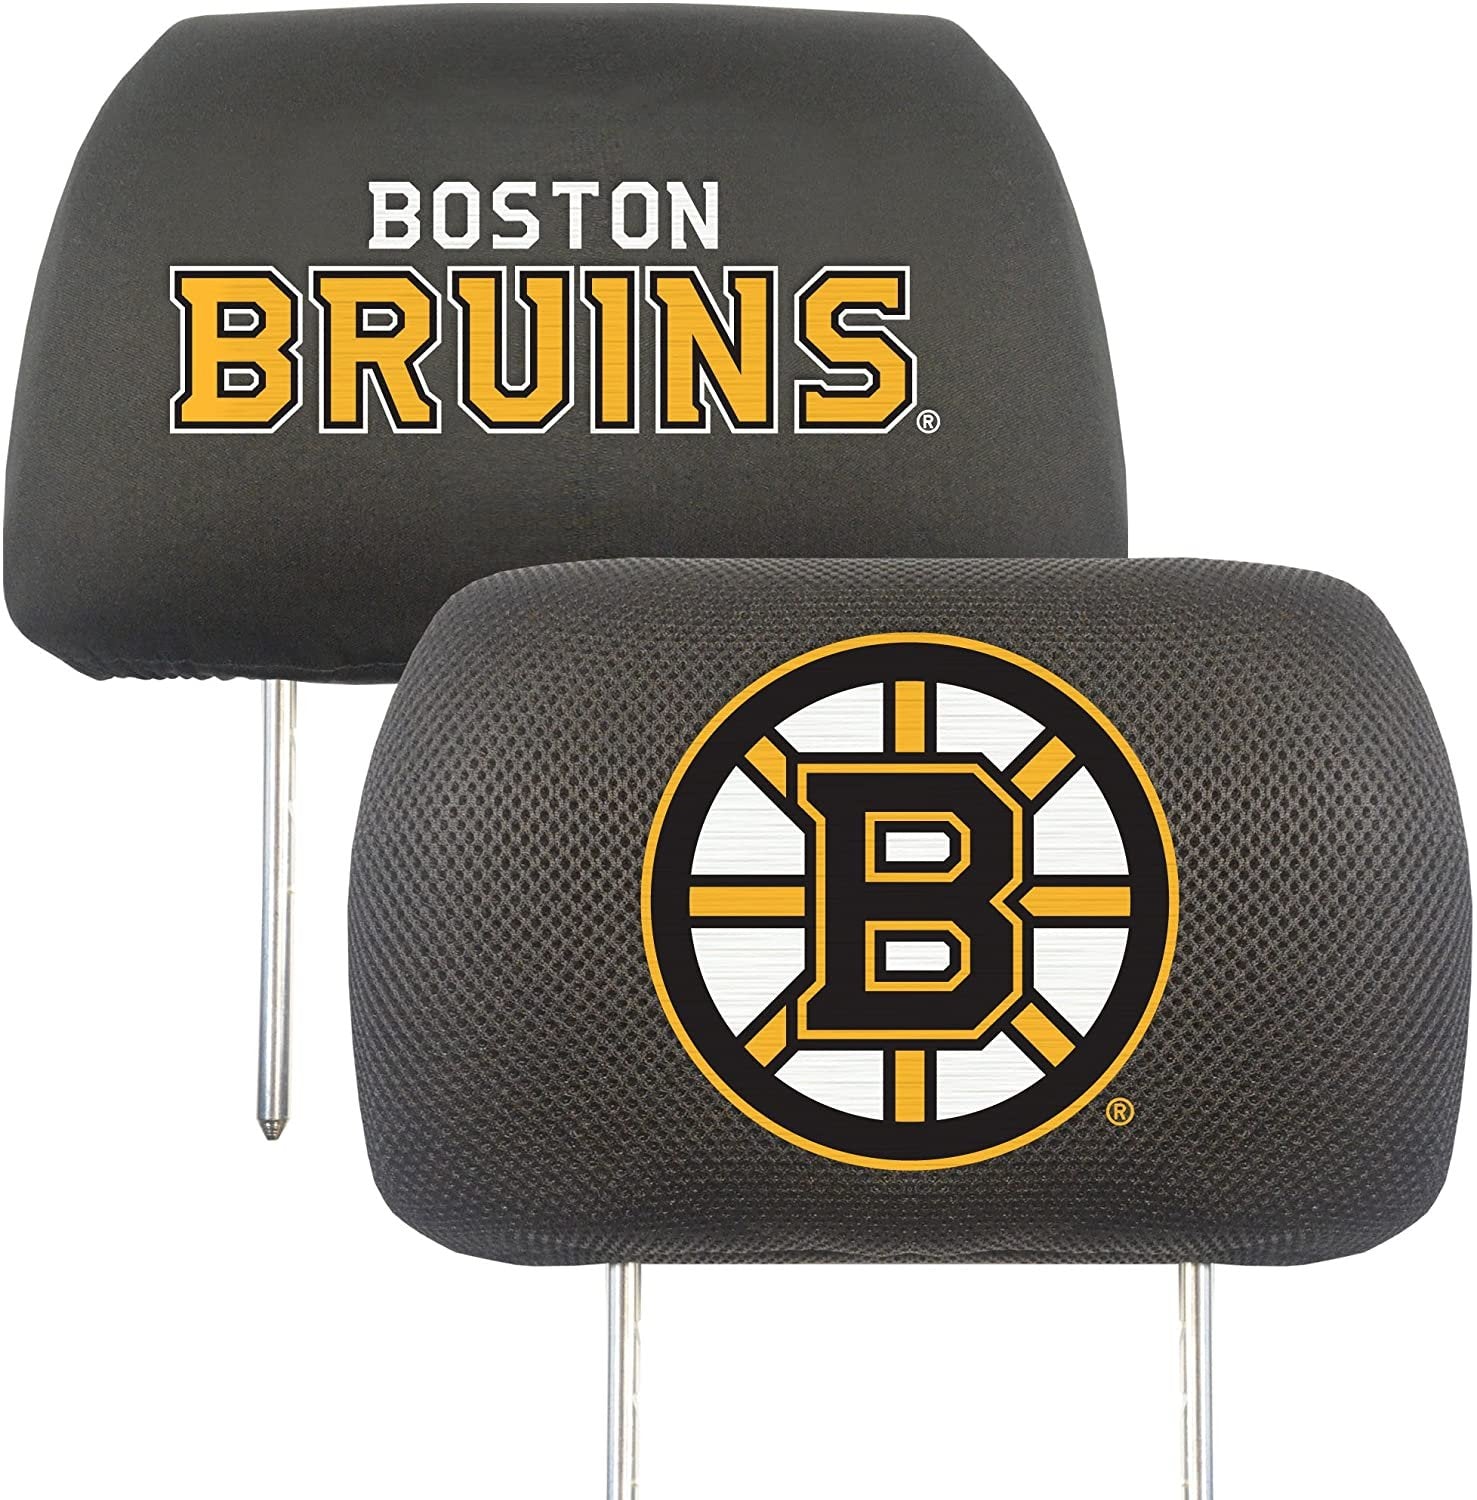 Boston Bruins Pair of Premium Auto Head Rest Covers, Embroidered, Black Elastic, 14x10 Inch